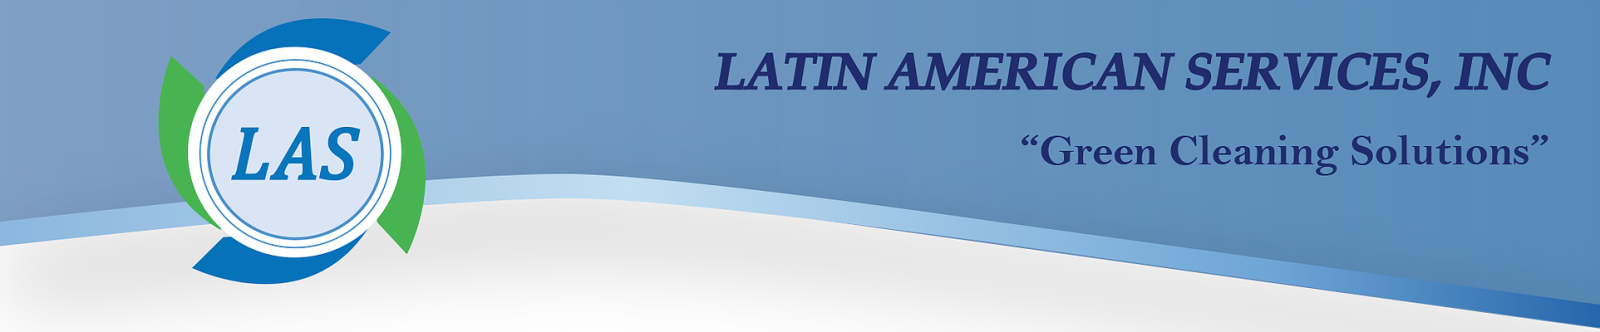 Latin American Services